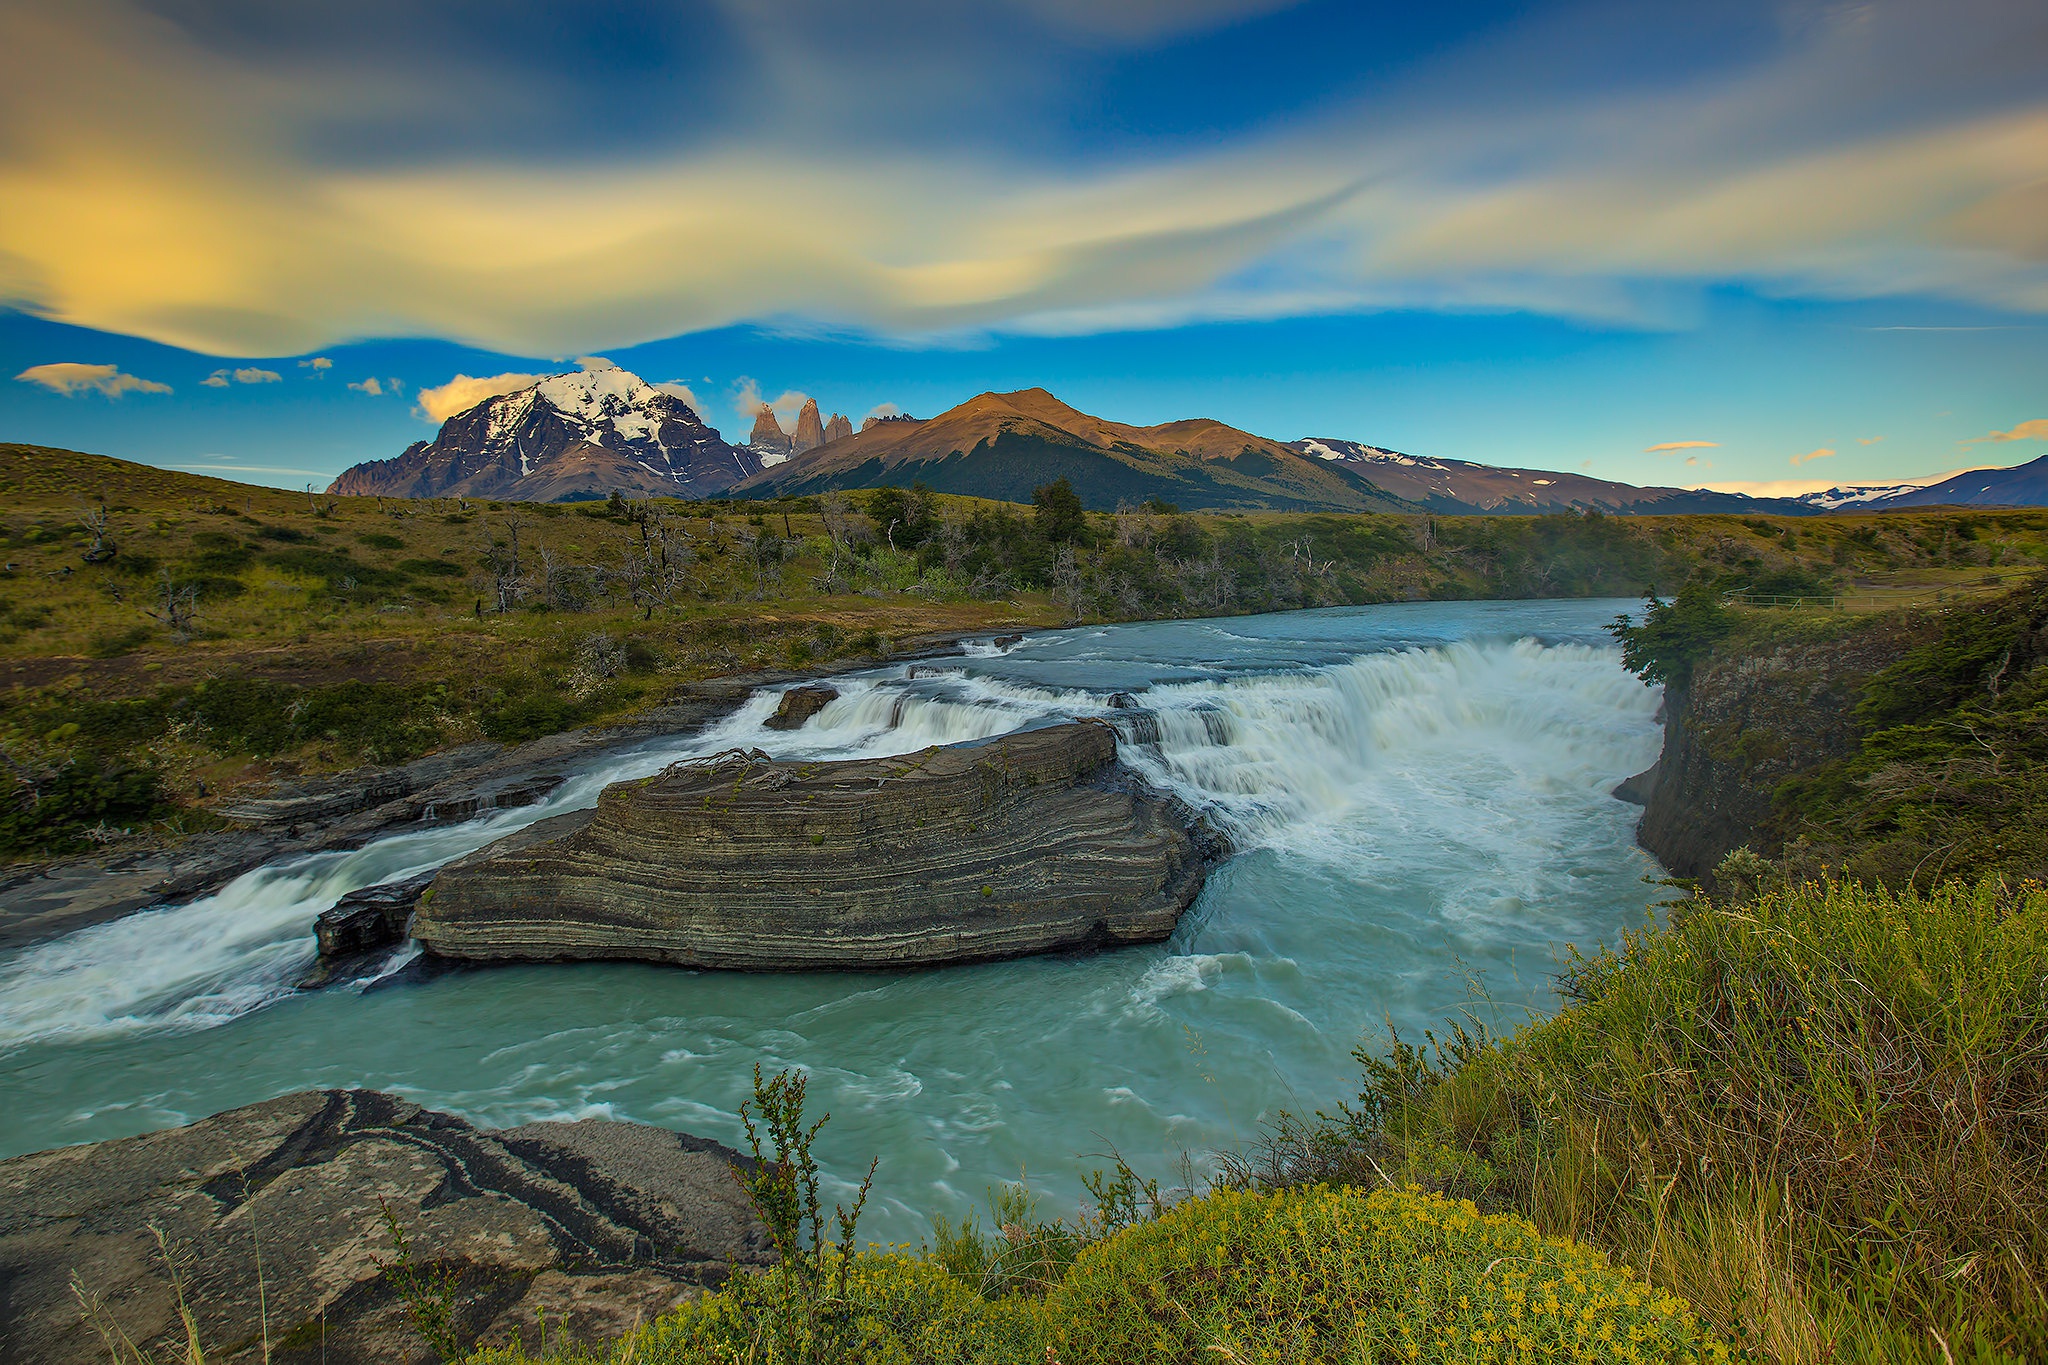 987025 descargar imagen tierra/naturaleza, rio, chile, montaña, patagonia: fondos de pantalla y protectores de pantalla gratis